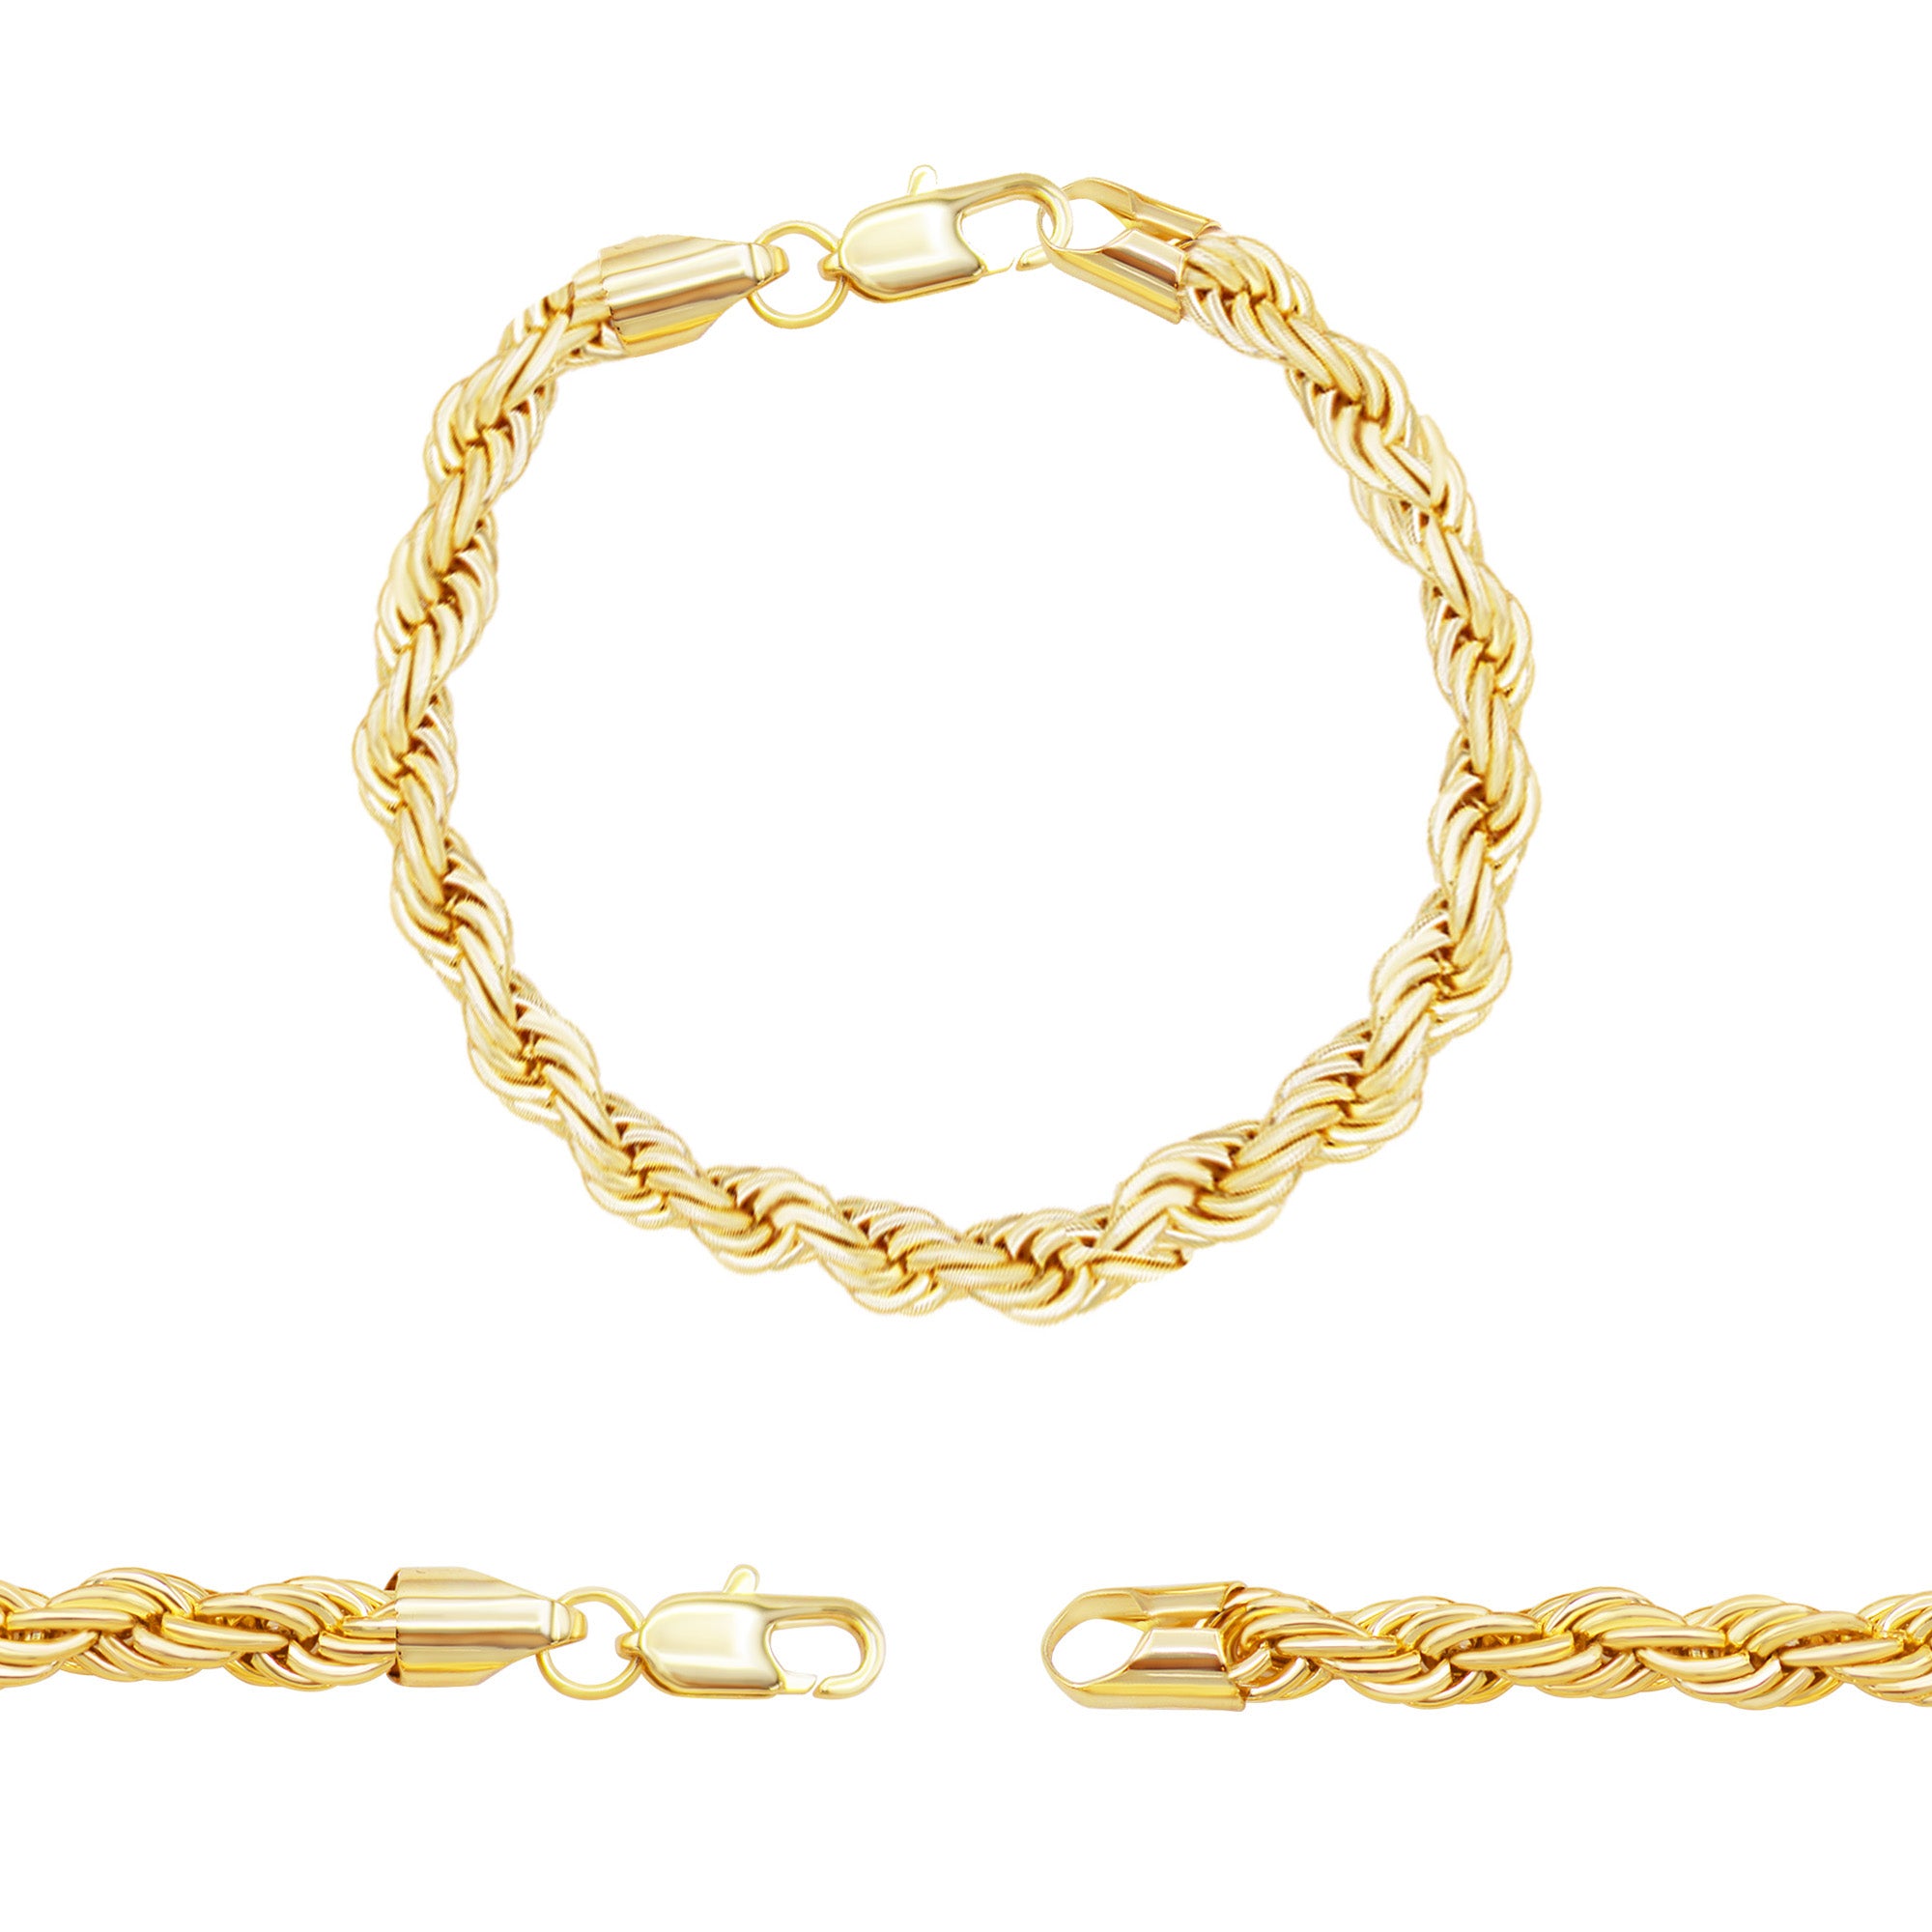 18 K Gold Filled Rope Bracelet, Gold Chain Bracelet, Rope Bracelet, Mens Bracelet, Gift for Men, Gold Bracelet, Gold Layering Bracelet